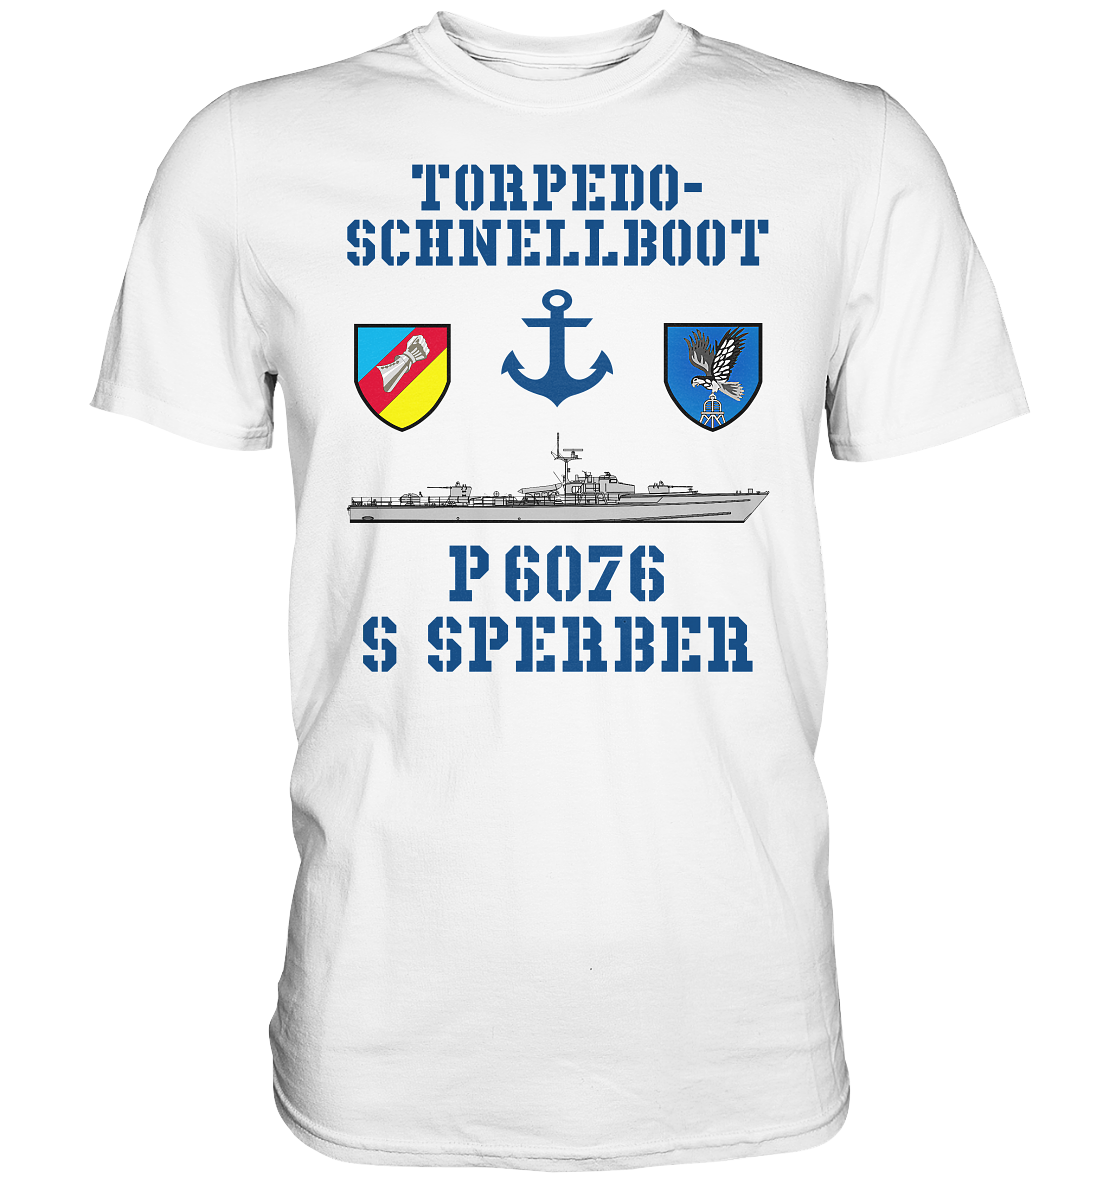 Torpedo-Schnellboot P6076 SPERBER Anker - Premium Shirt